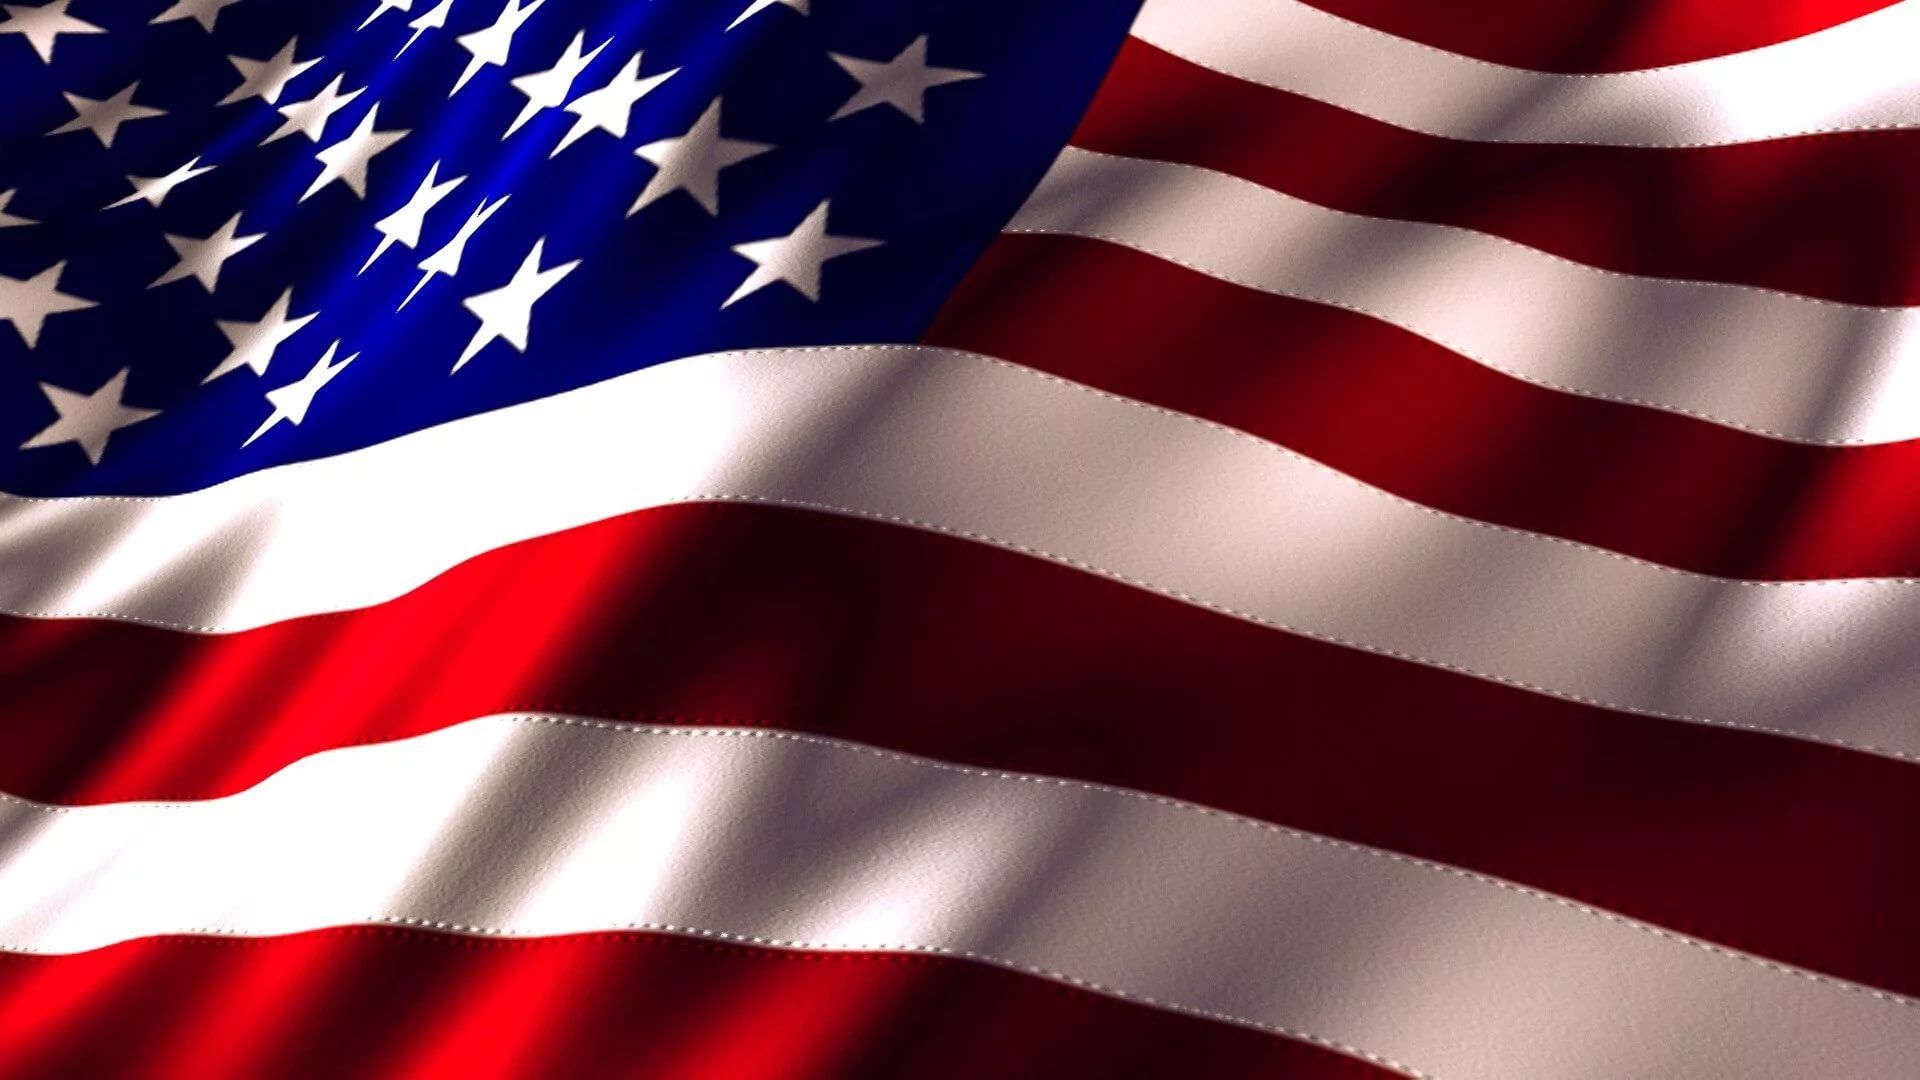 America Flag wallpaper image hd